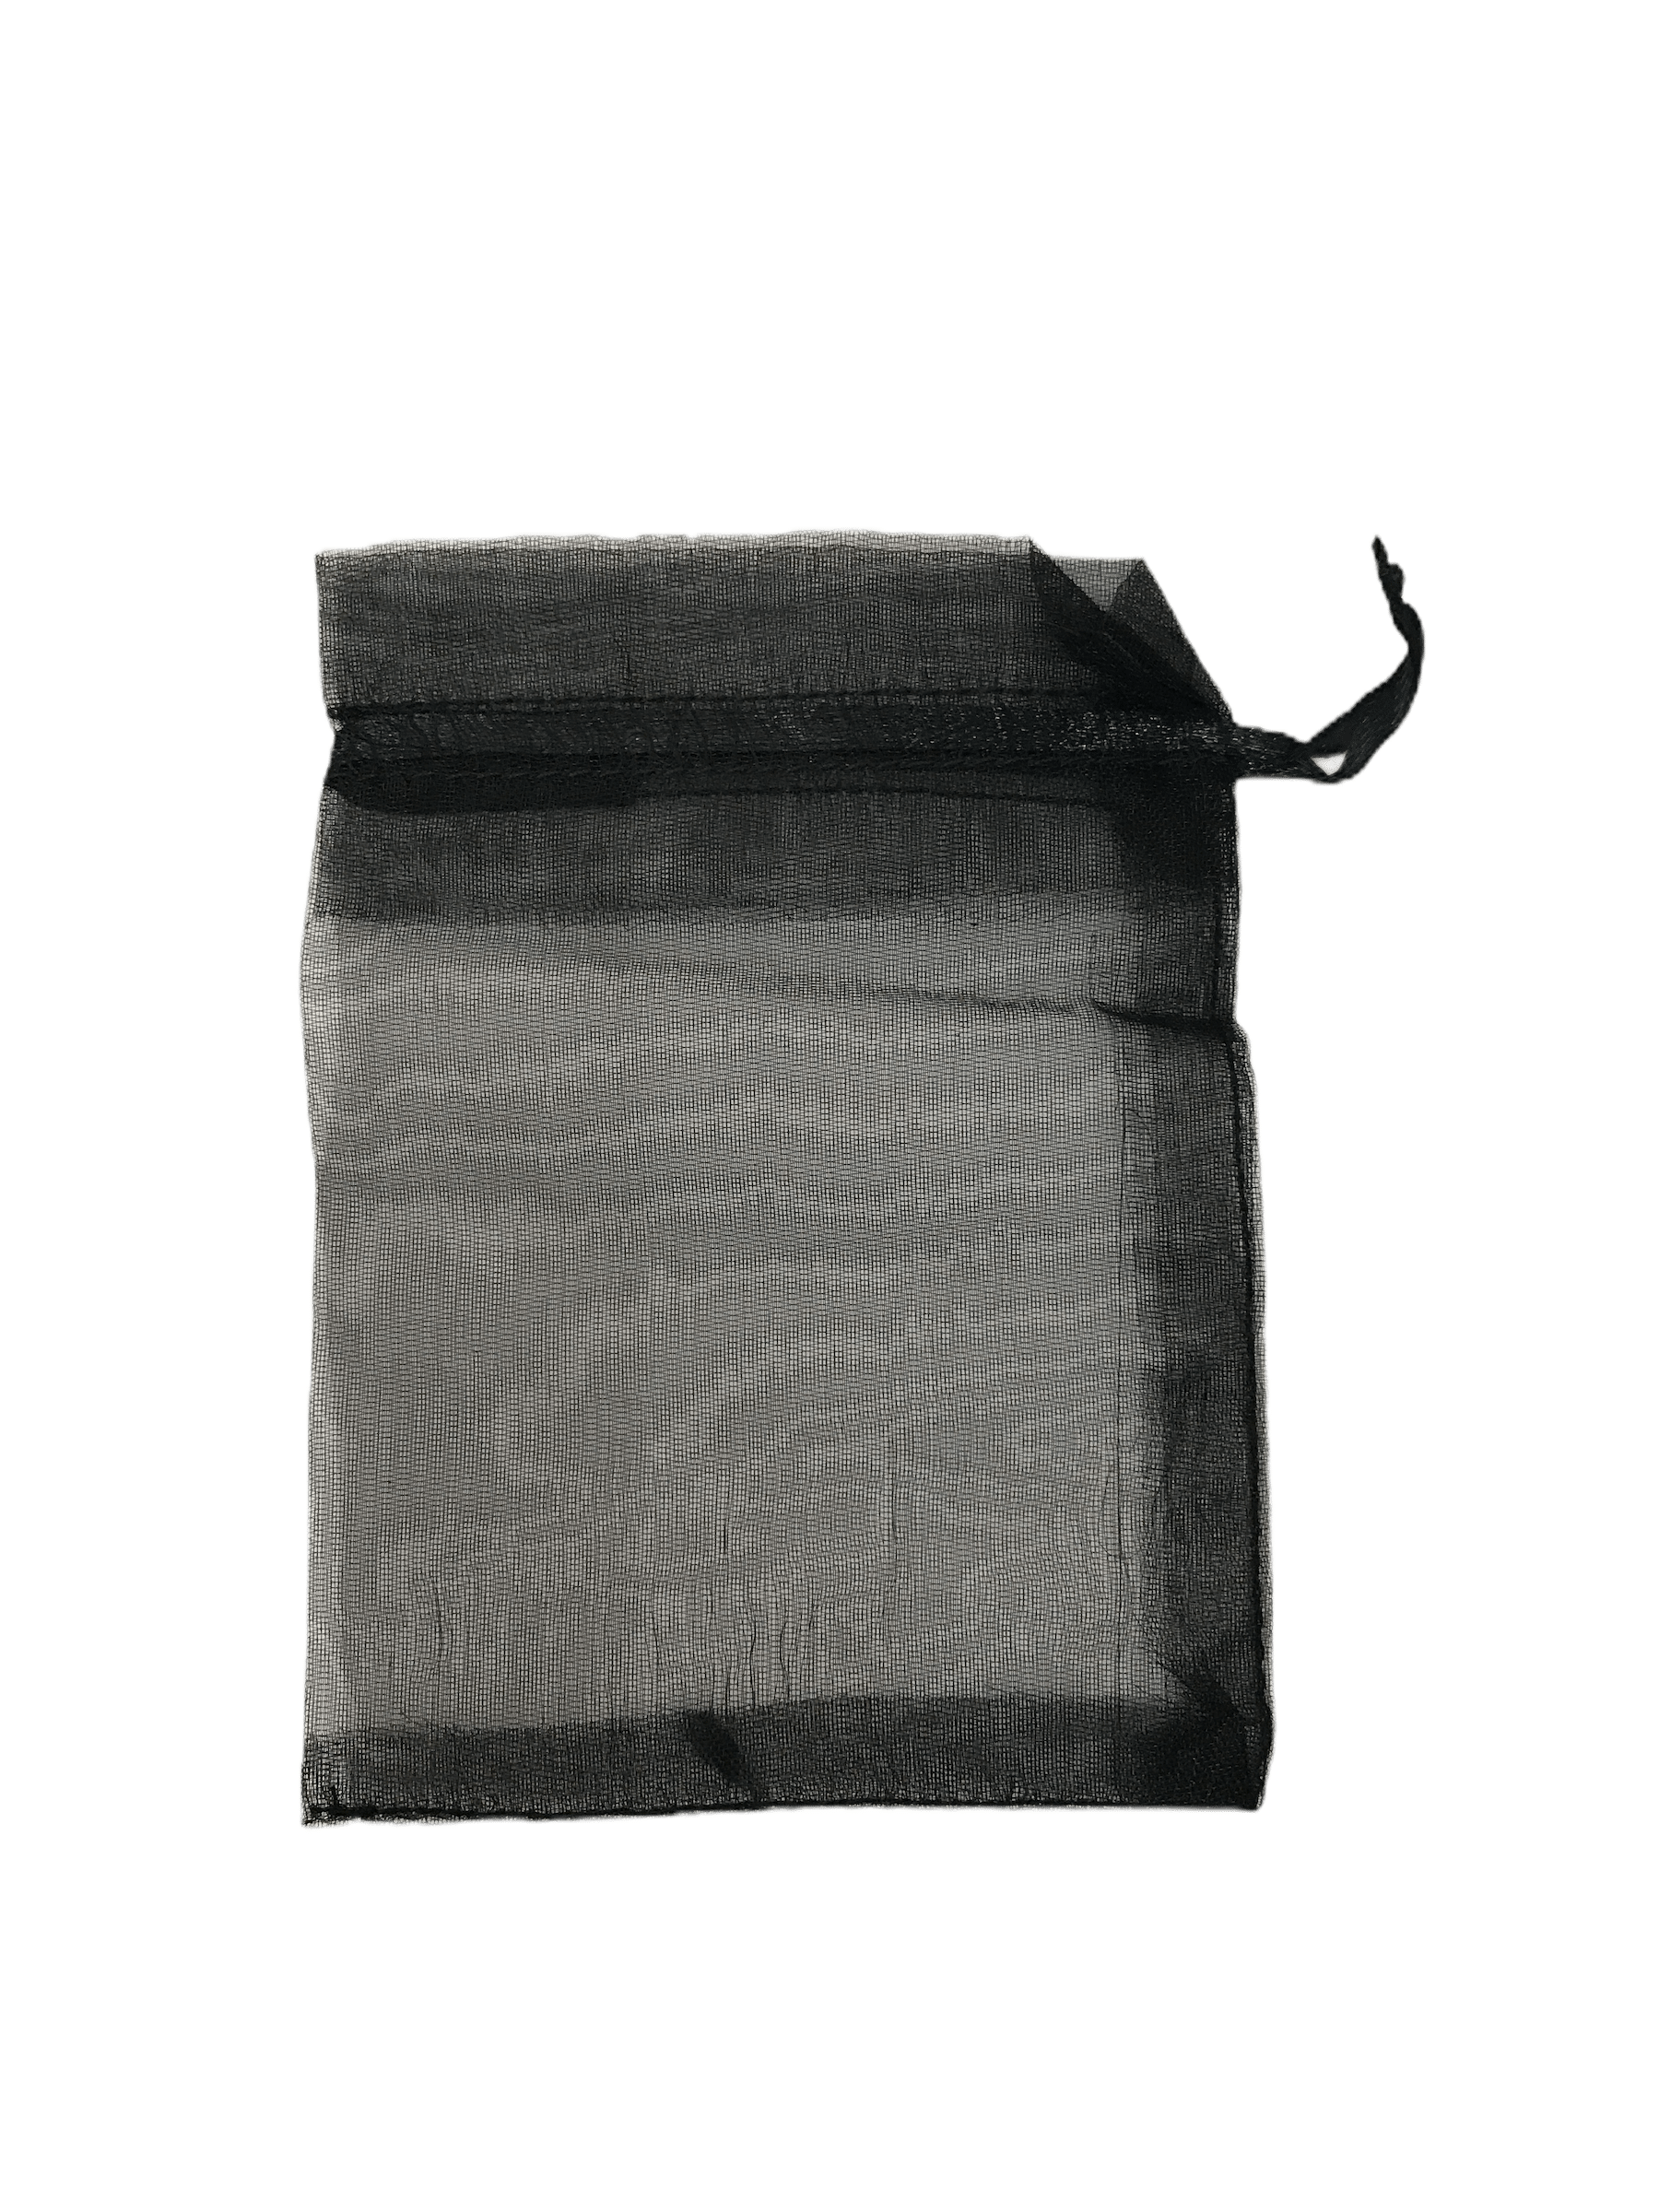 Sacs organza noir (x50) | Grossiste-pro